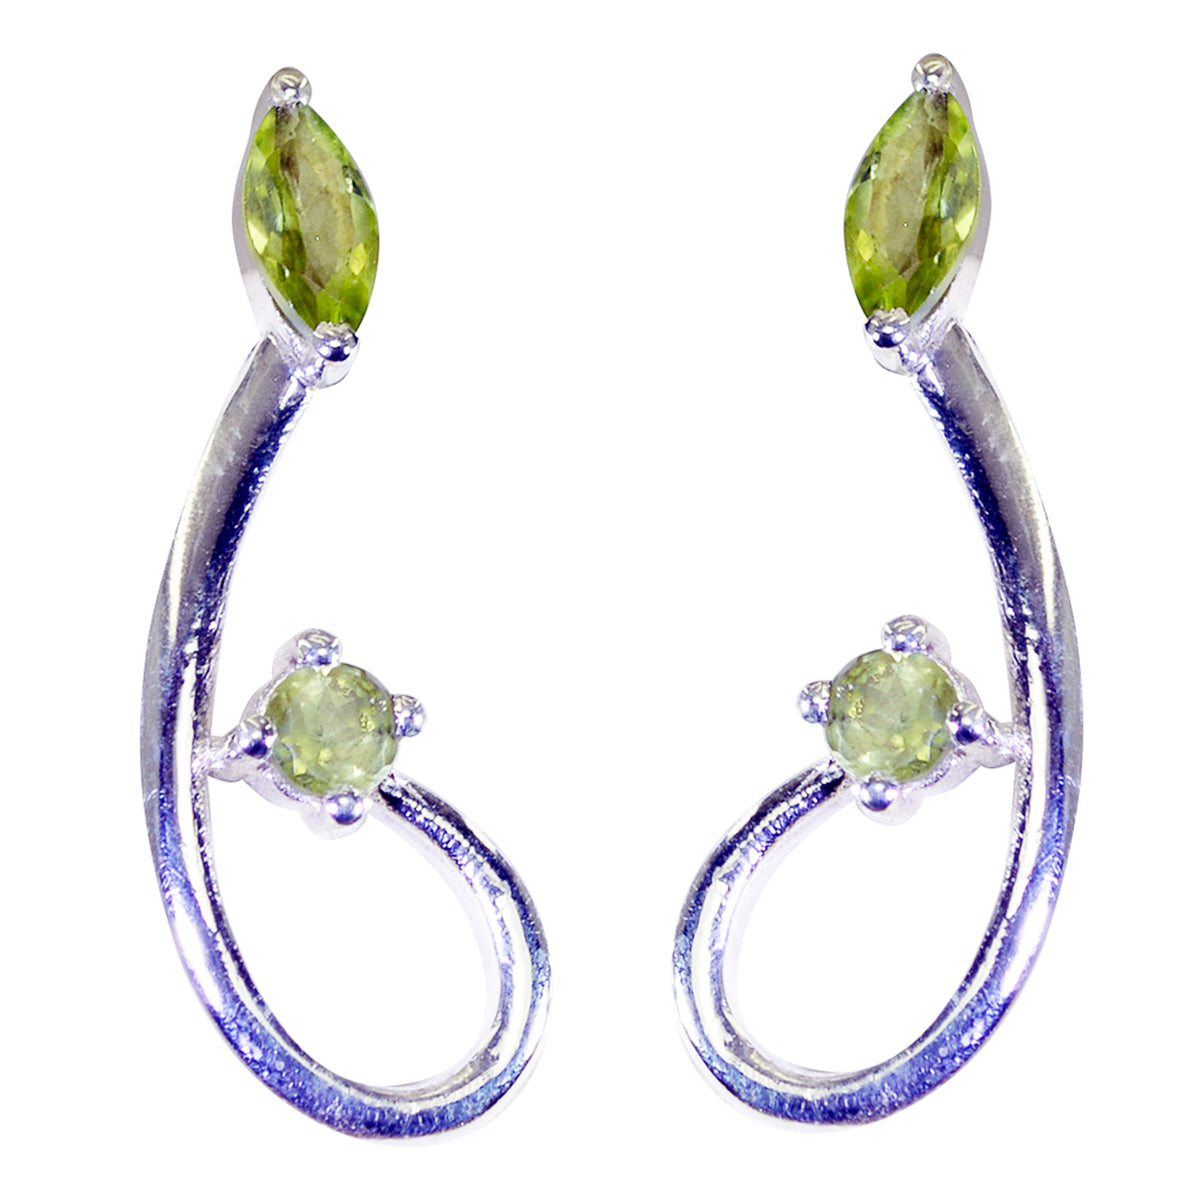 Riyo Good Gemstones multi shape Faceted Green Peridot Silver Earrings gift for college